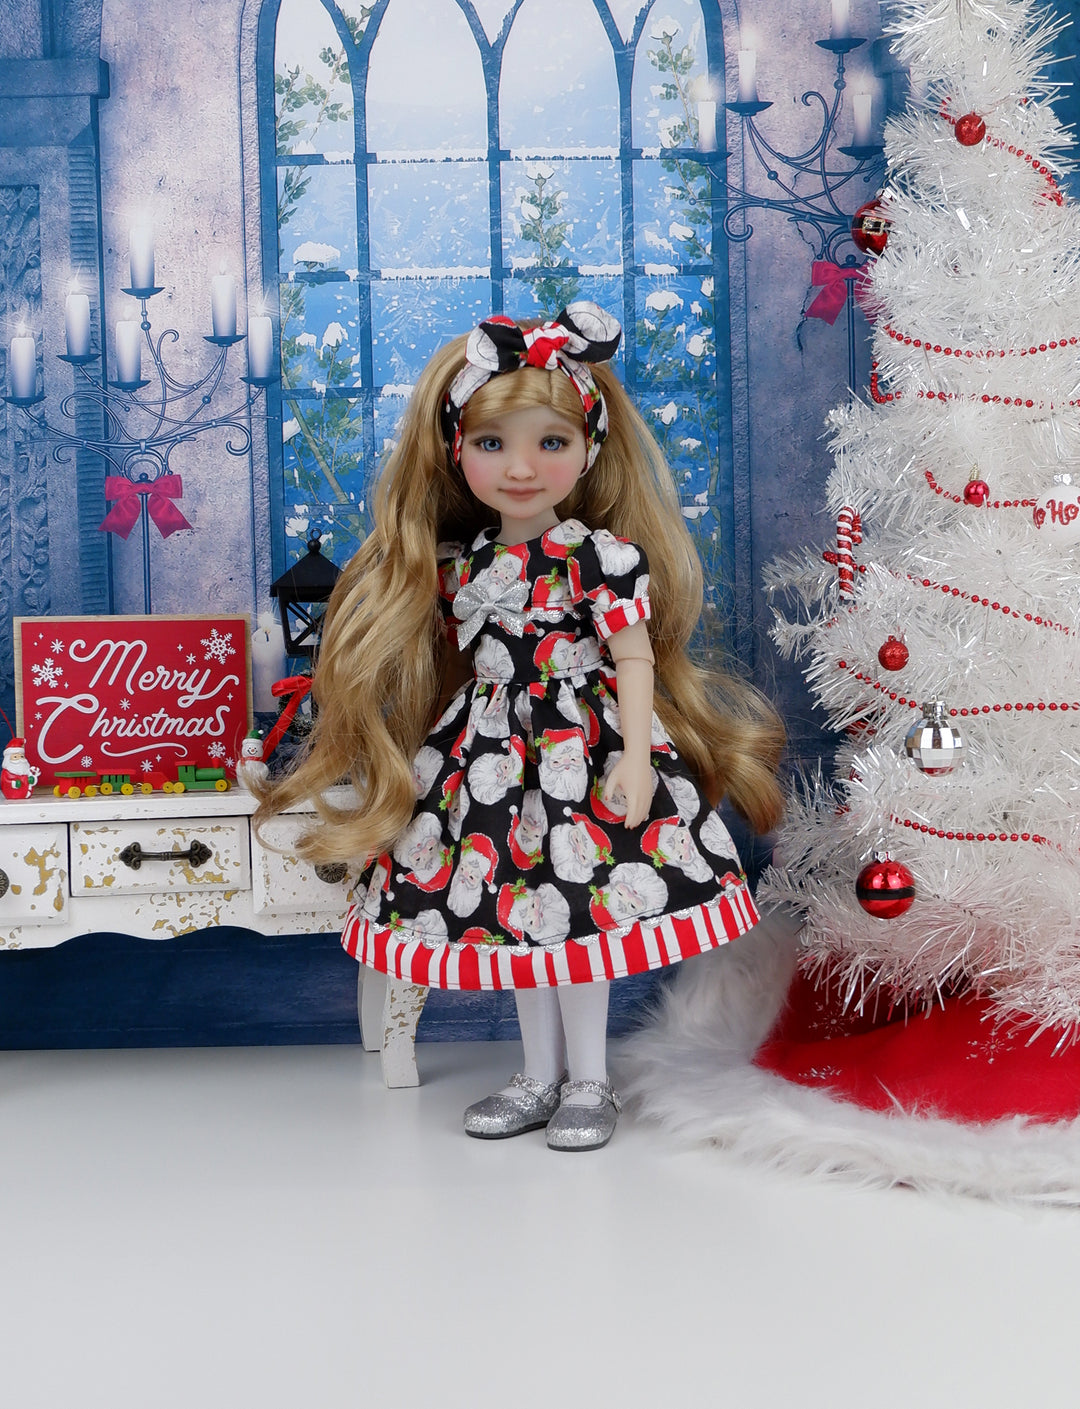 Waiting for Santa - dress ensemble for Ruby Red Fashion Friends doll